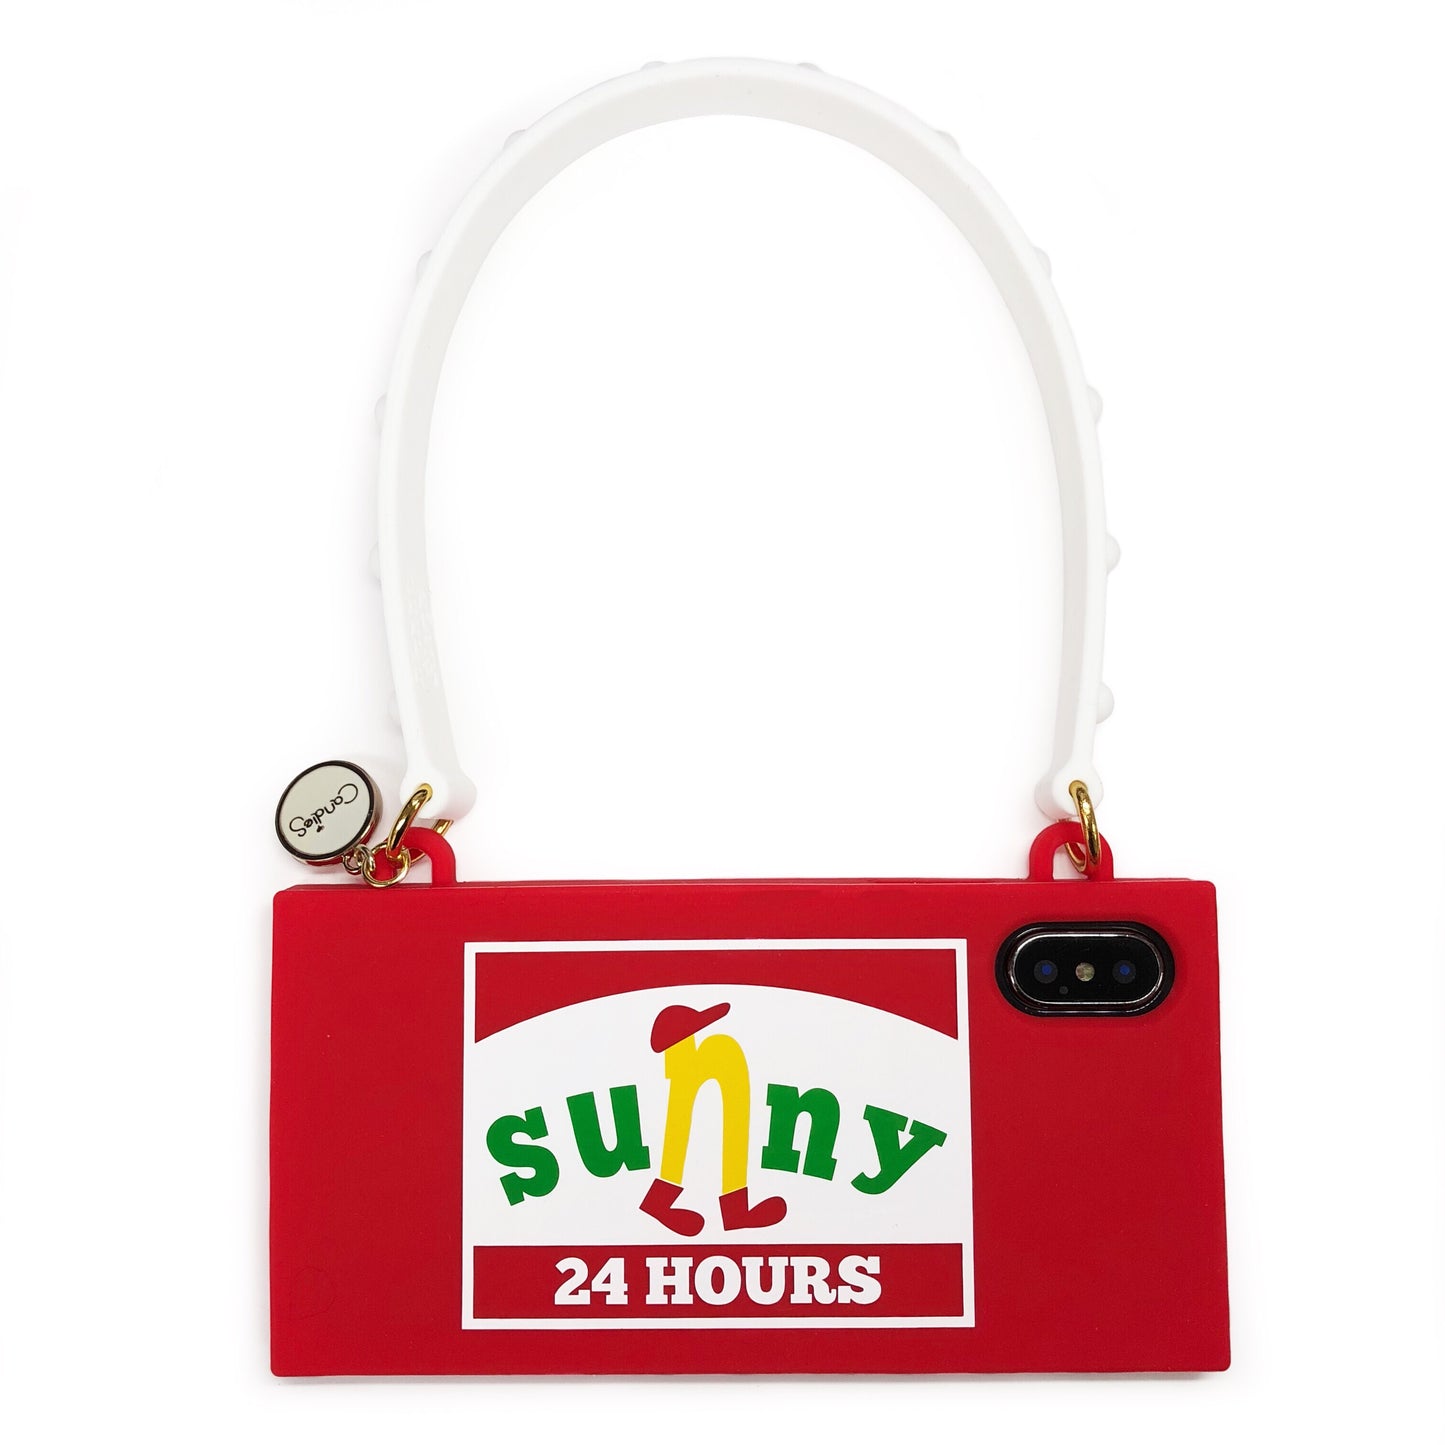 iPhone X/Xs Parody Handbag Case - Sunny 24 Hours